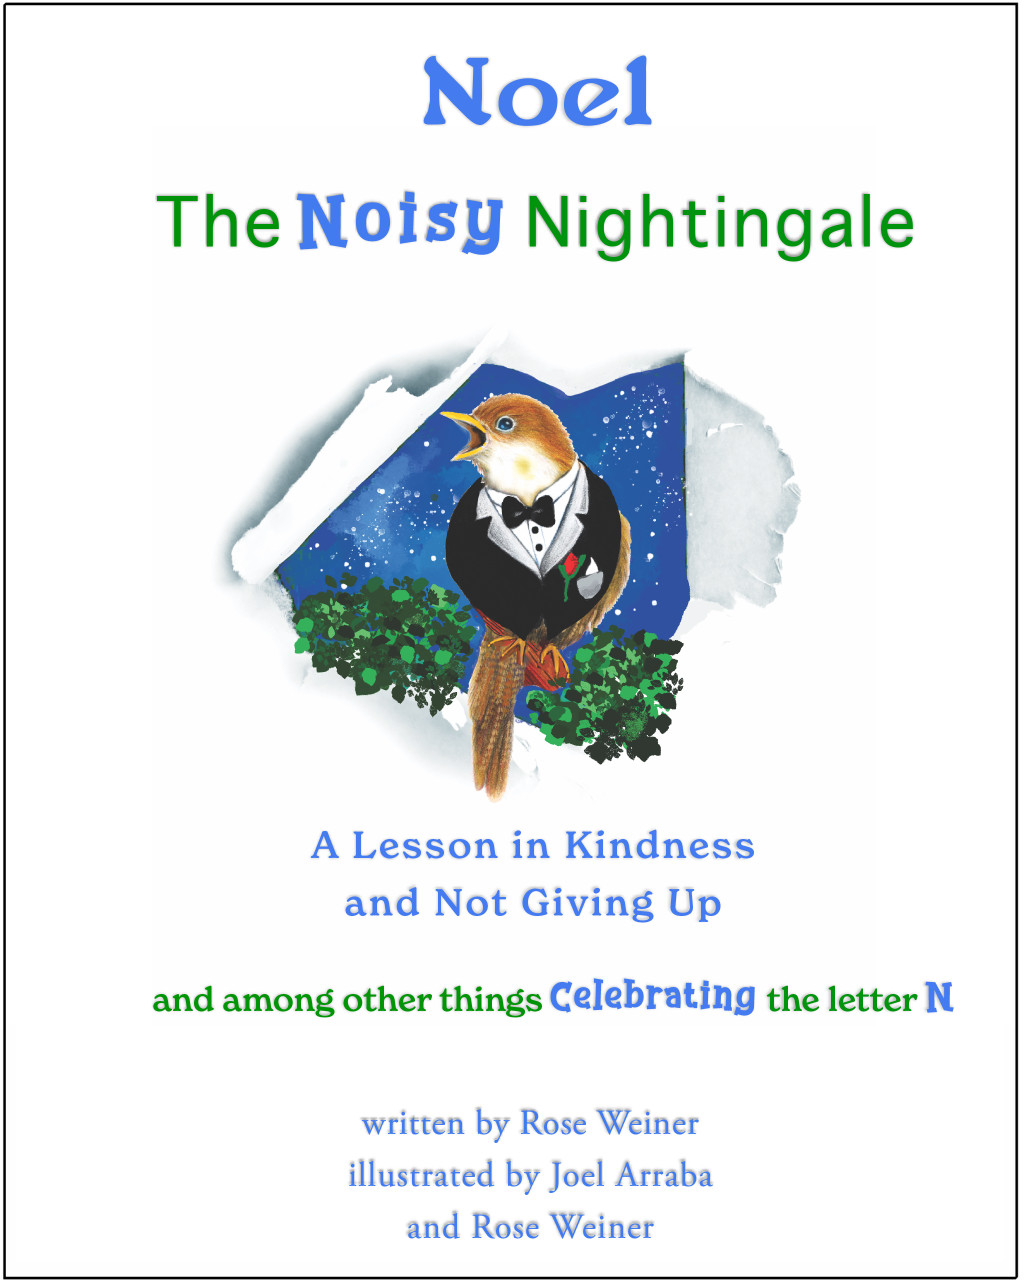 Noel the Noisy Nightingale